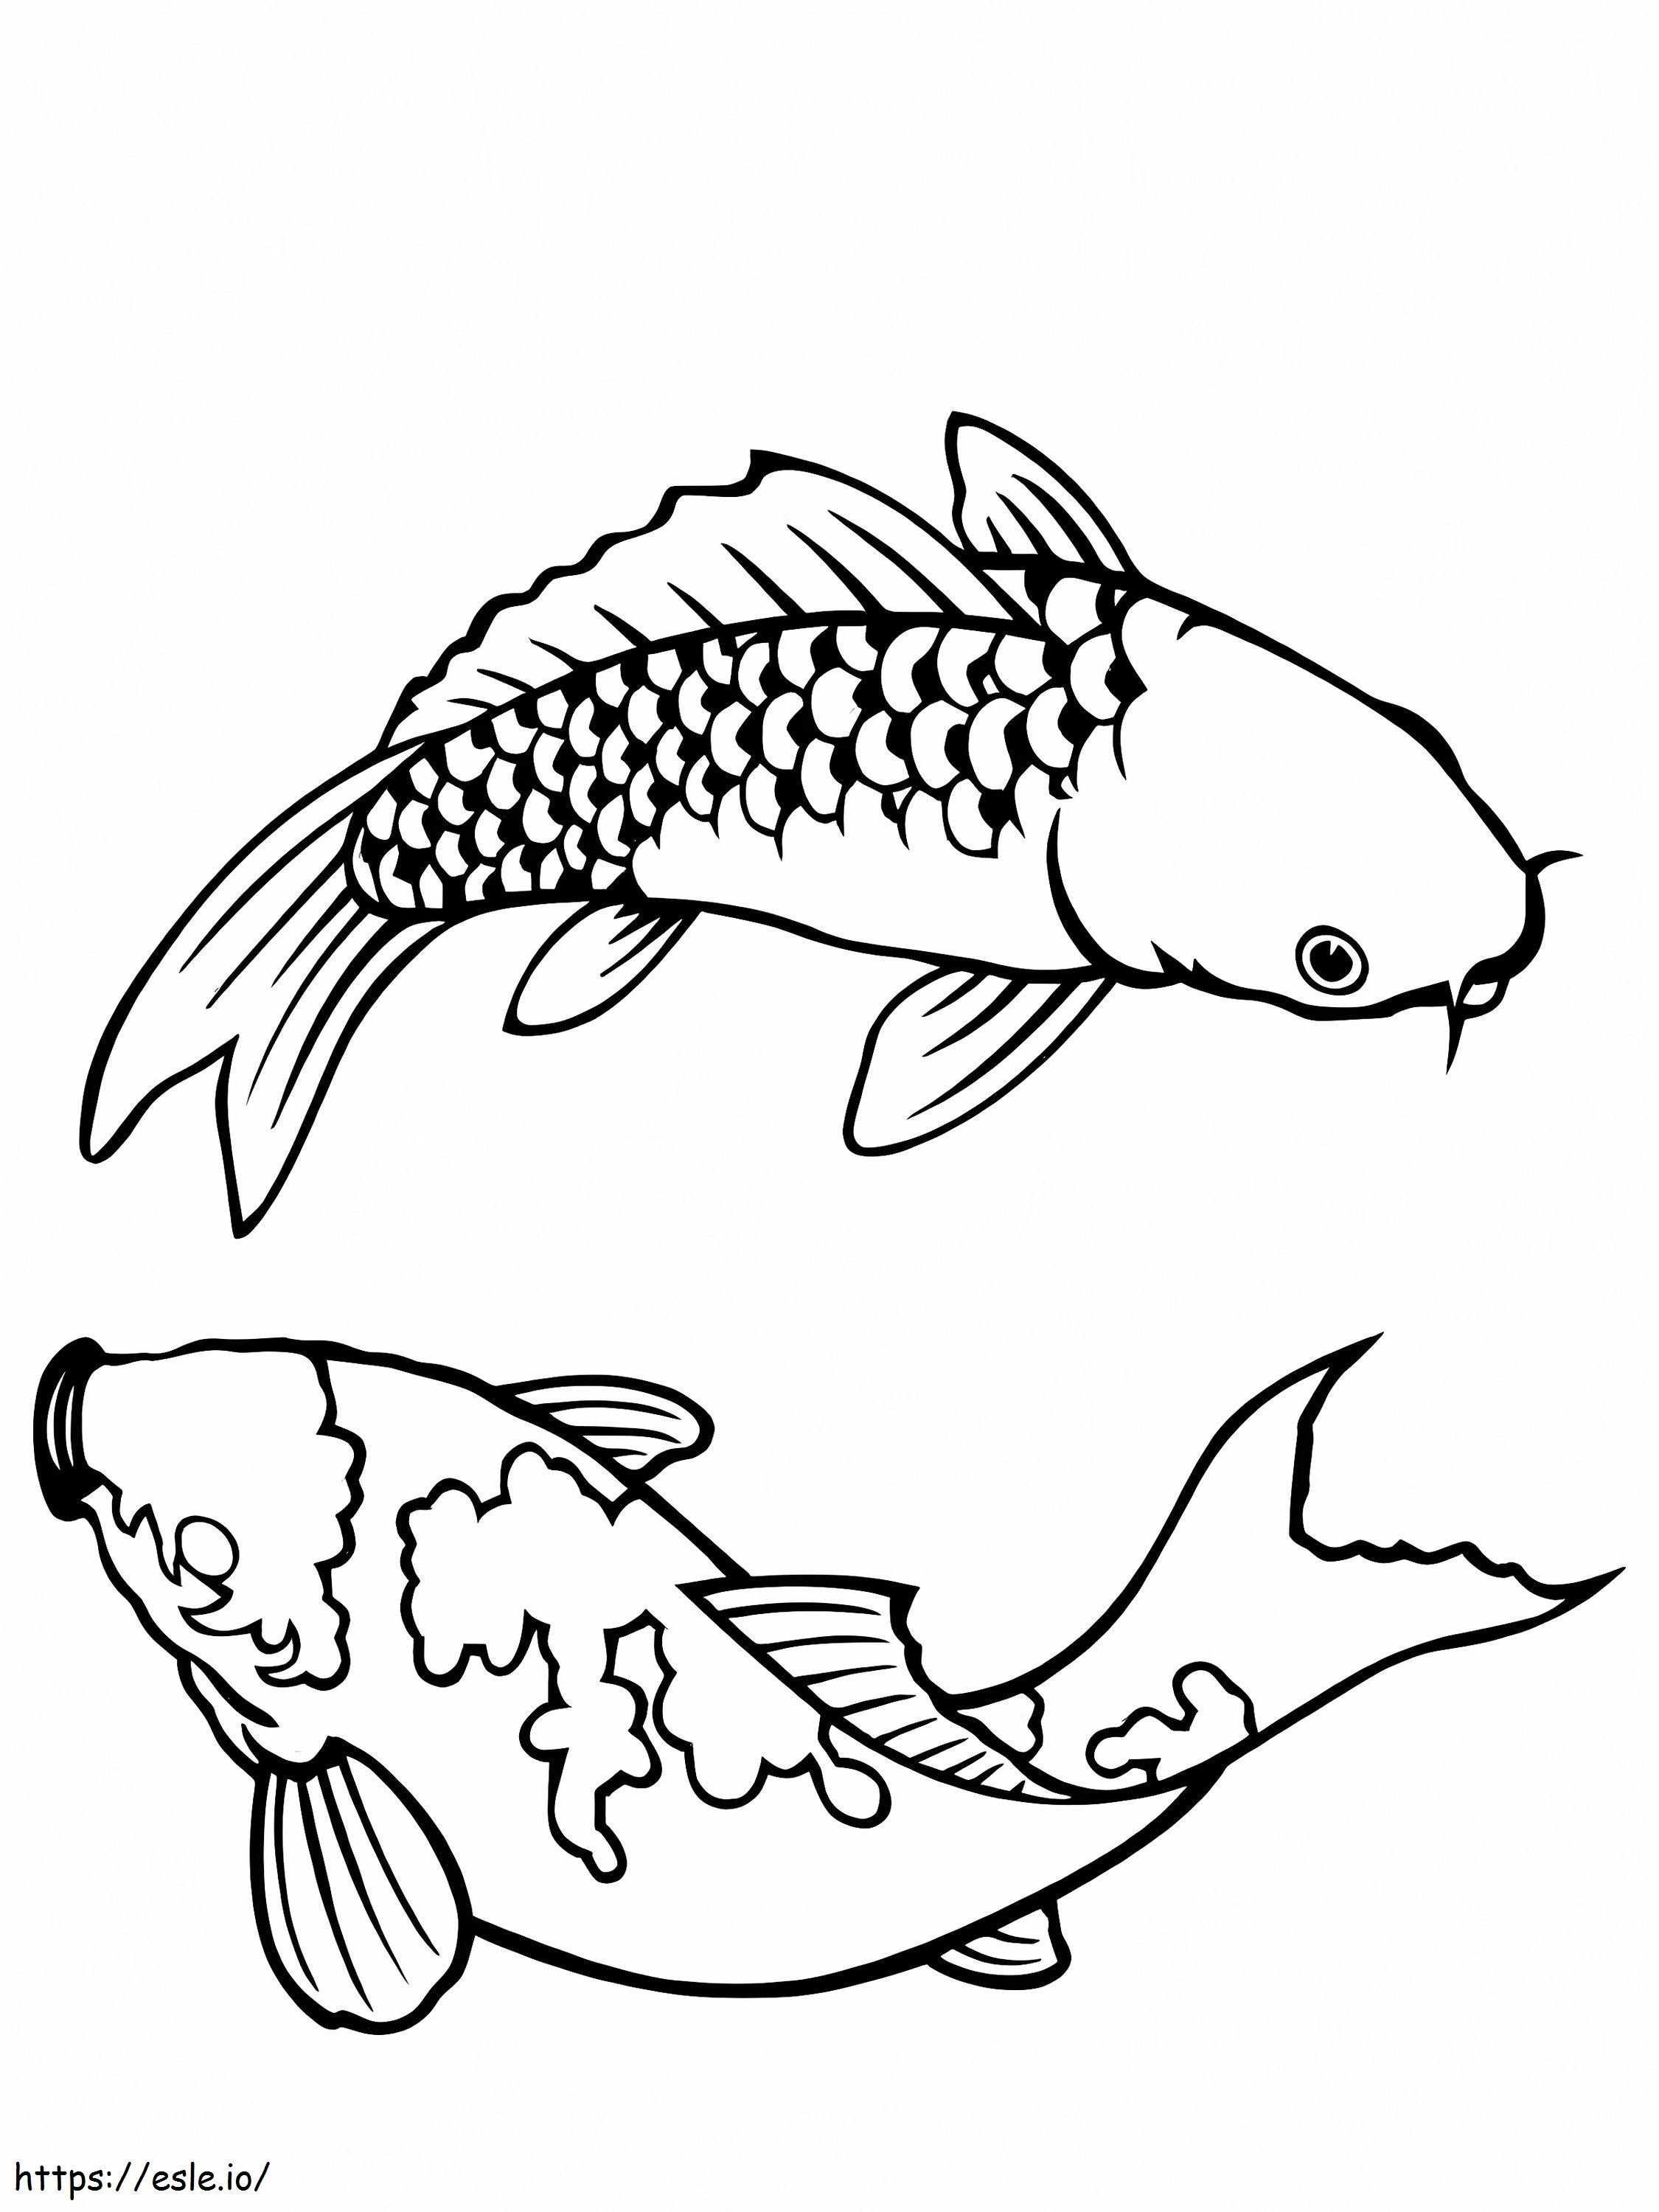 Couple Koi Fish coloring page